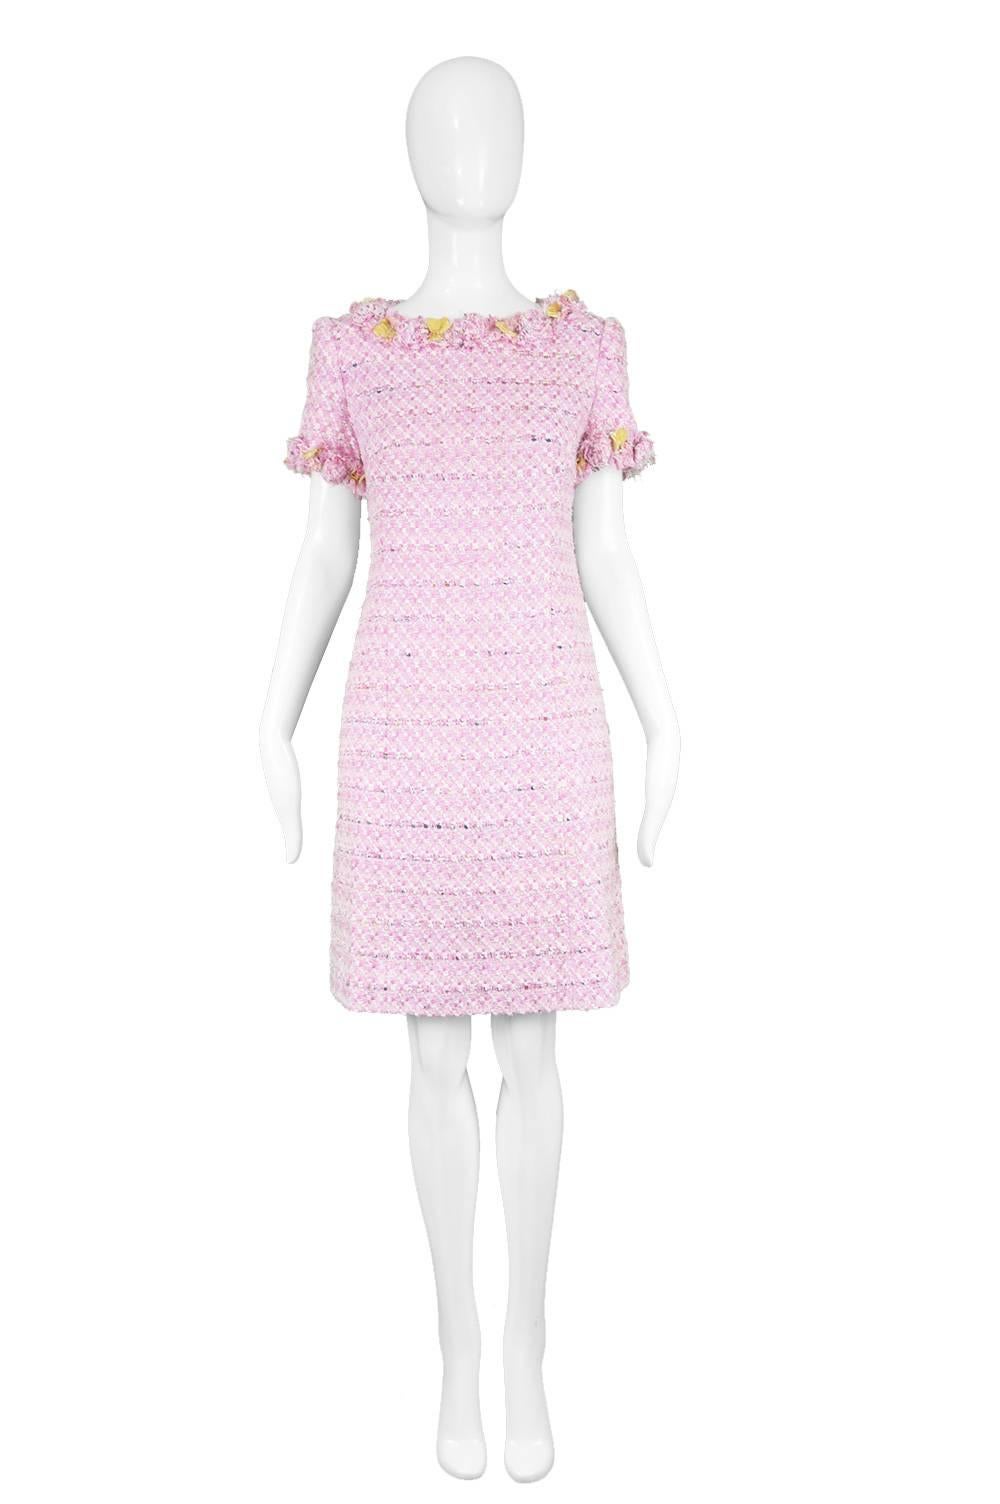 Bellville Sassoon Vintage 1990s Pink & White Bouclé Tweed Shift Dress

Size: UK 10/ US 6/ EU 38. Please check measurements. 
Bust - 34” / 86cm
Waist - 30” / 76cm
Hips - 36” / 91cm
Length (Shoulder to Hem) - 35” / 89cm
Shoulder to Shoulder - 14” /